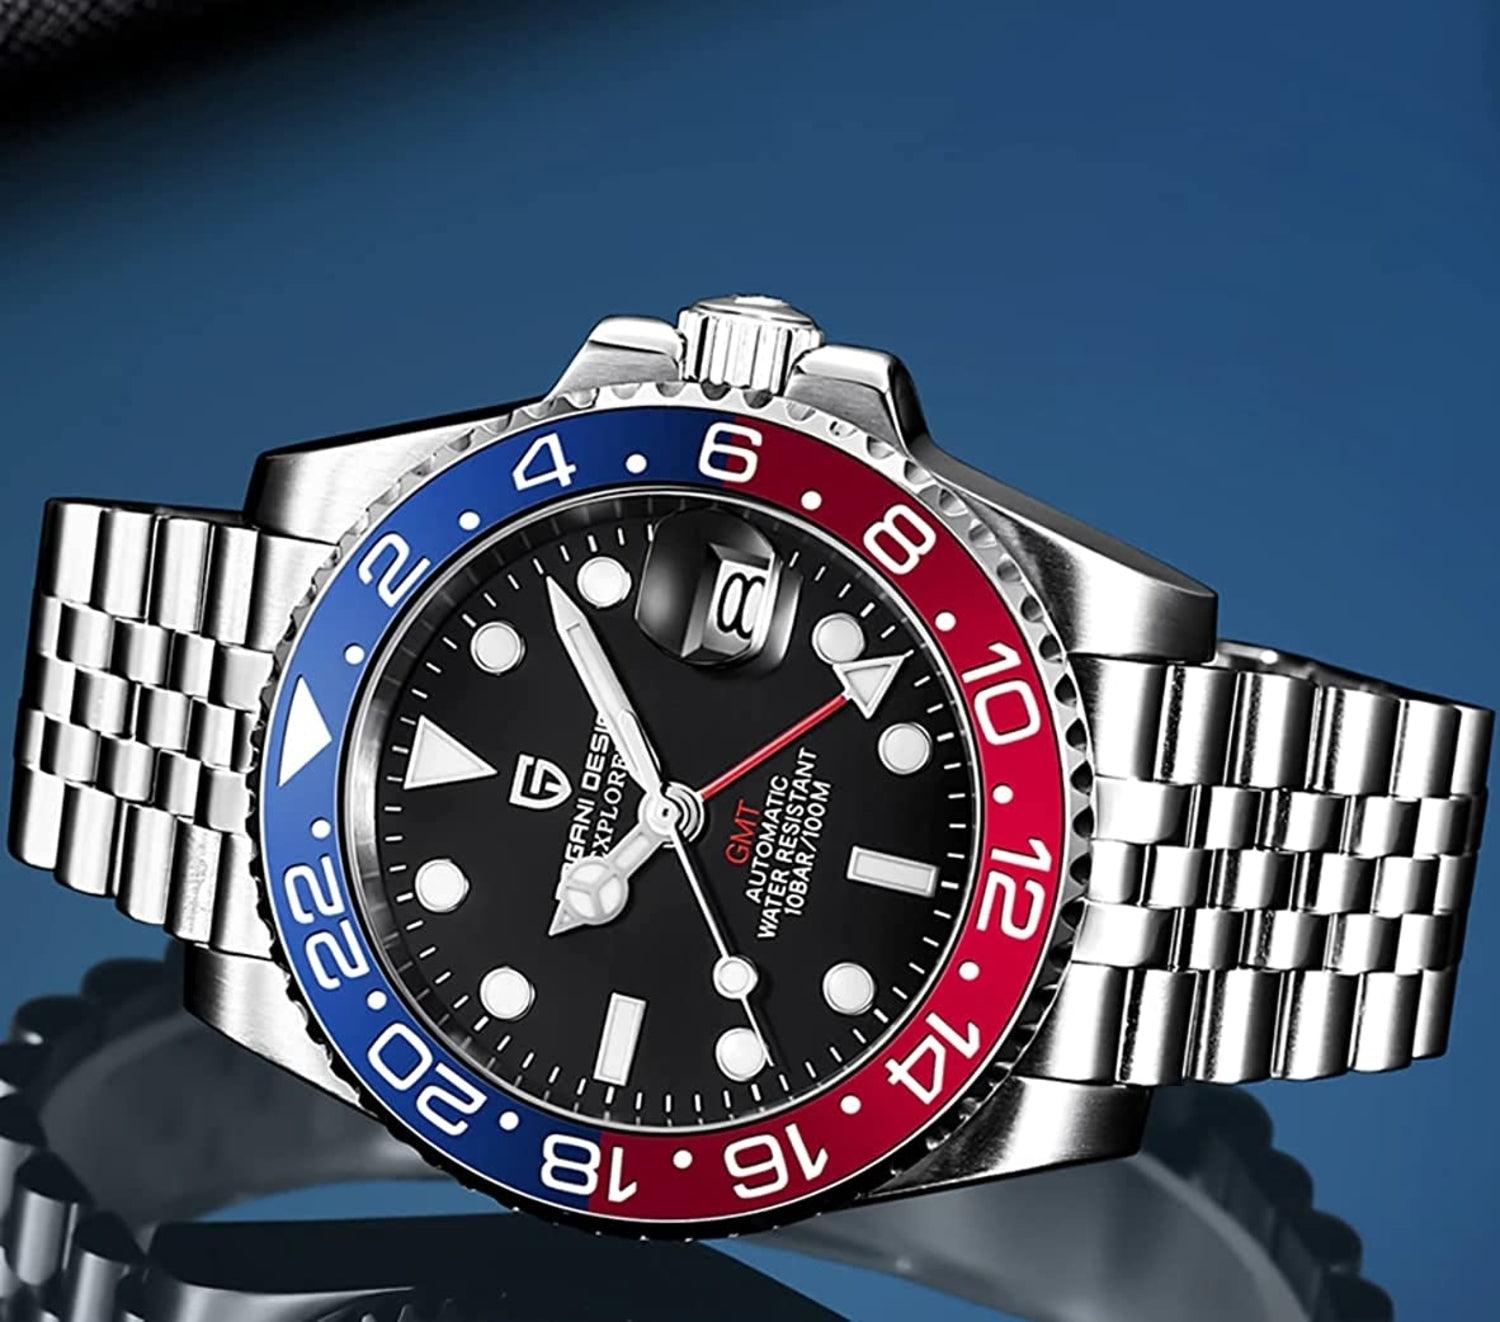 Pagani Design PD-1662 Waterproof Mechanical Automatic Watch Stainless Steel Men's 40MM Watch (Pepsi - Jubilee Bracelet) - DREAM WATCHES